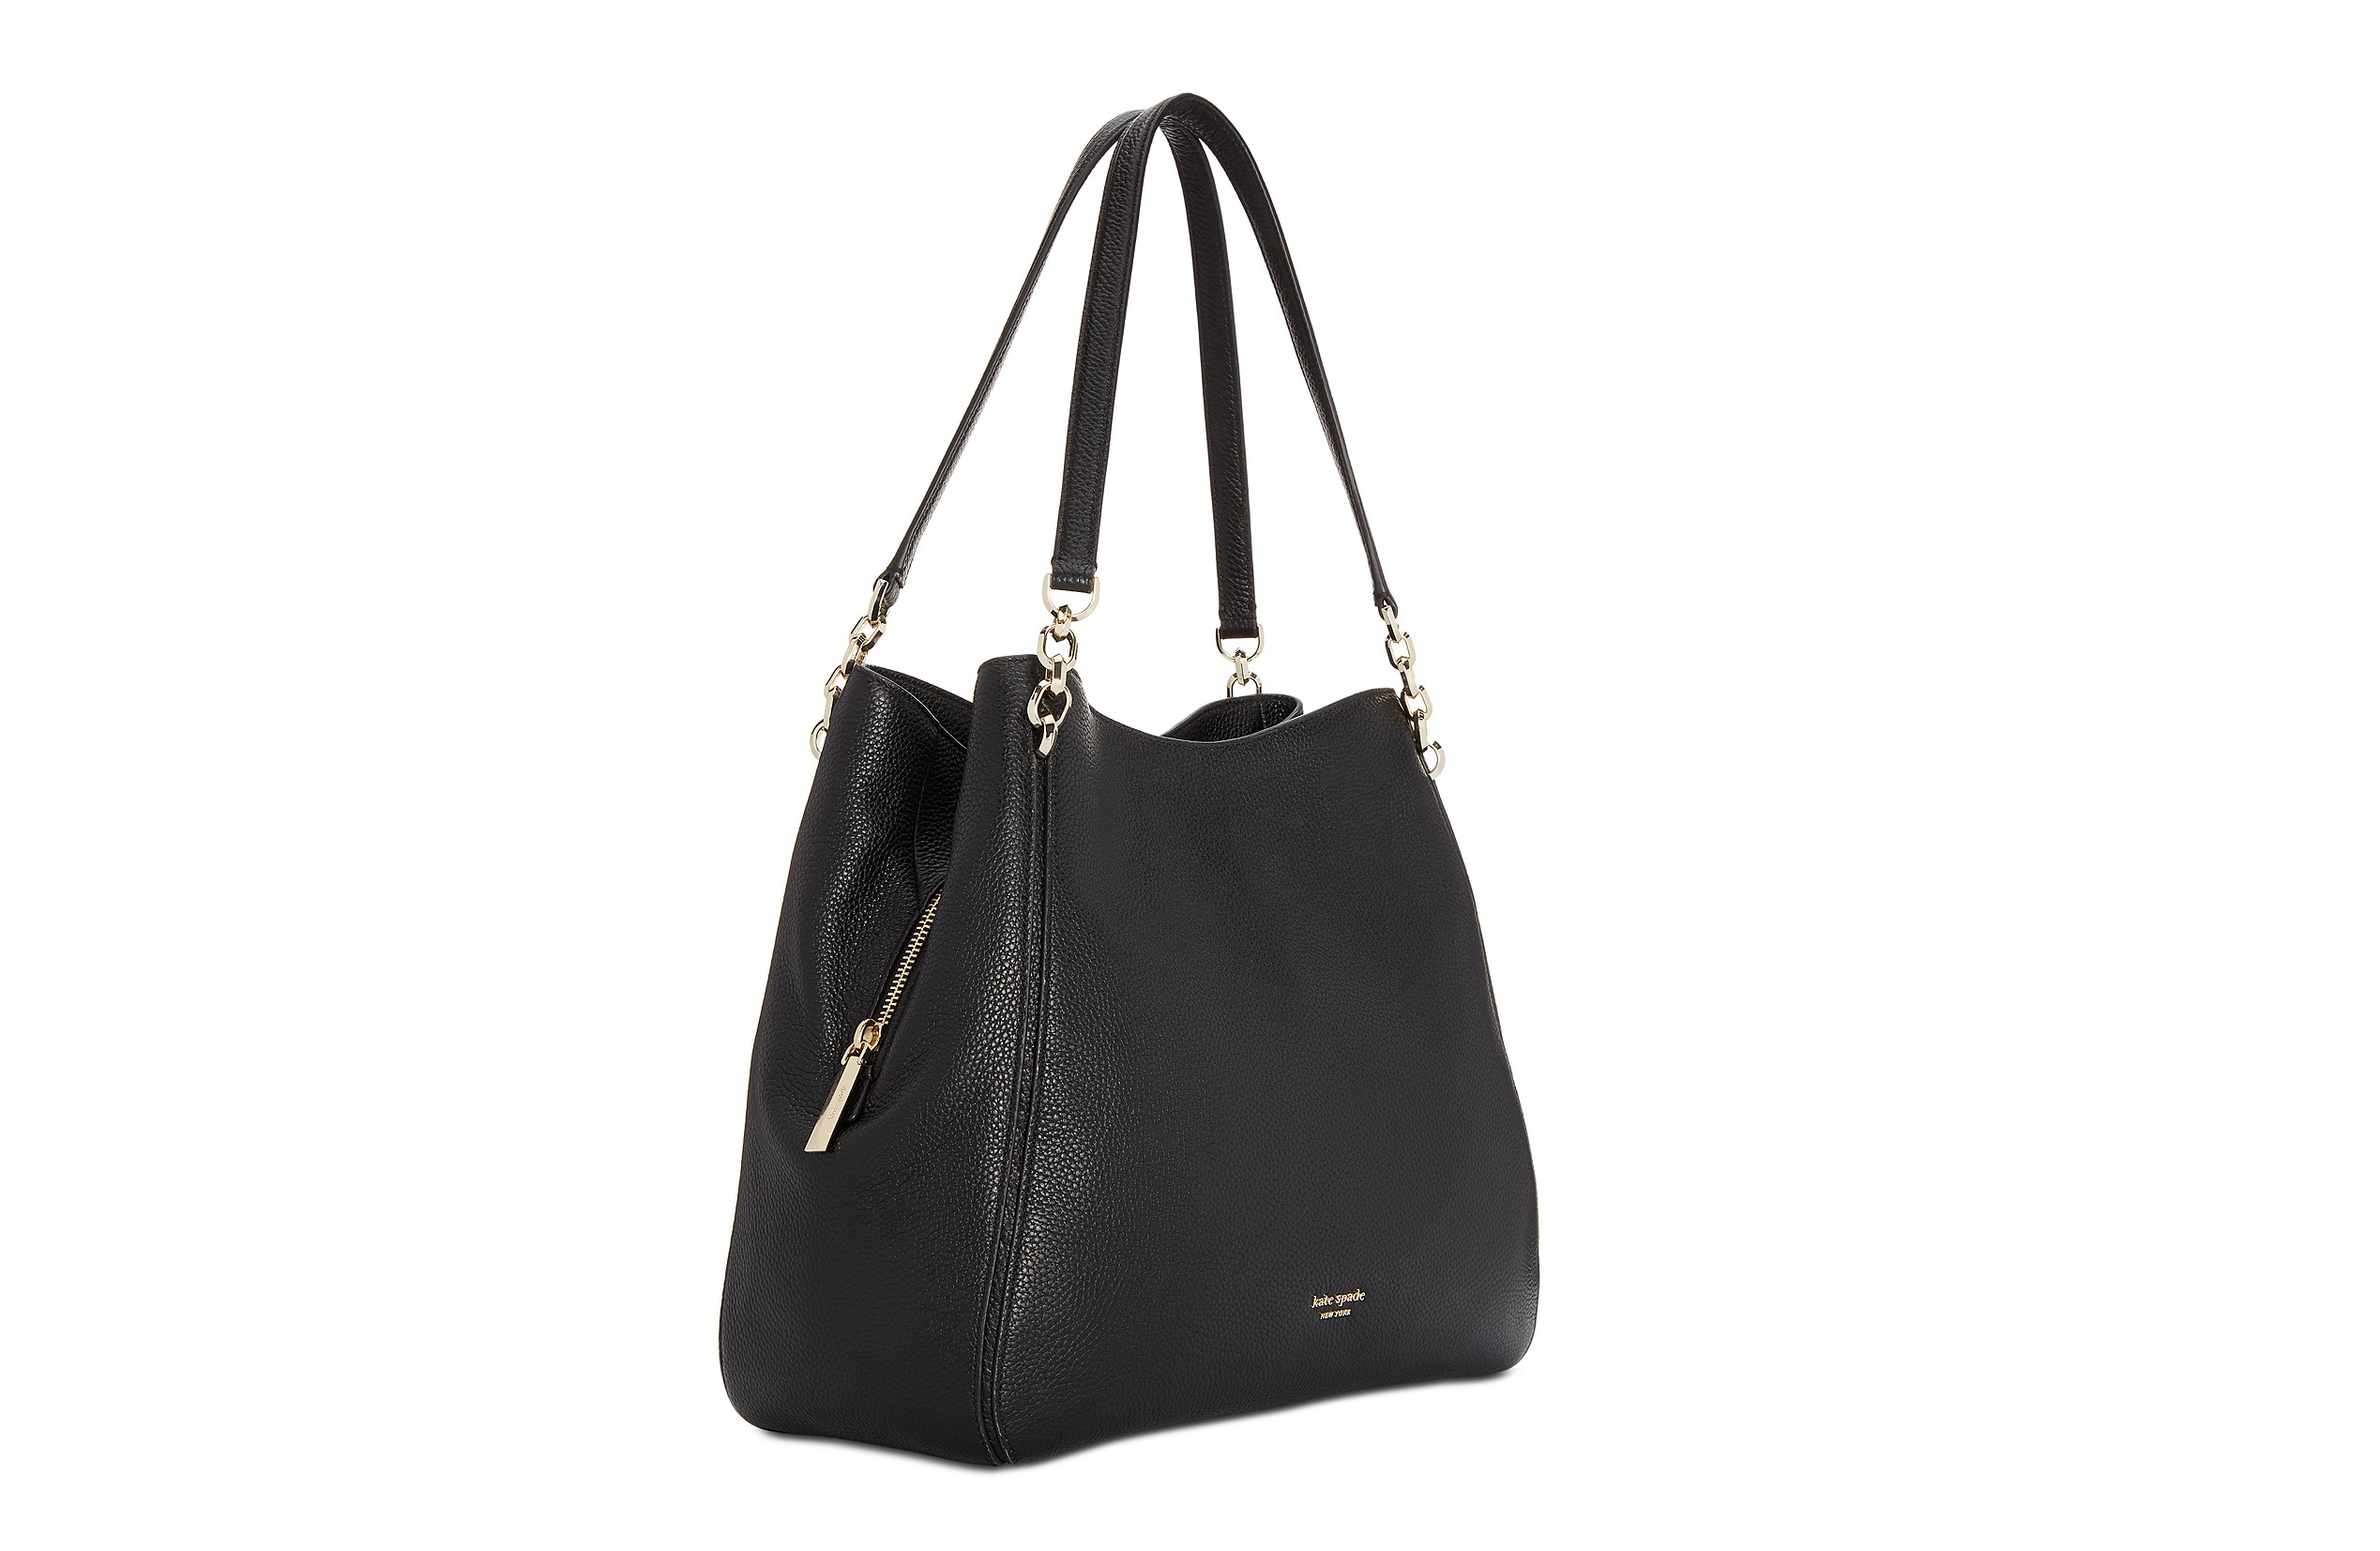 Women recount why their Kate Spade purse was more than a handbag